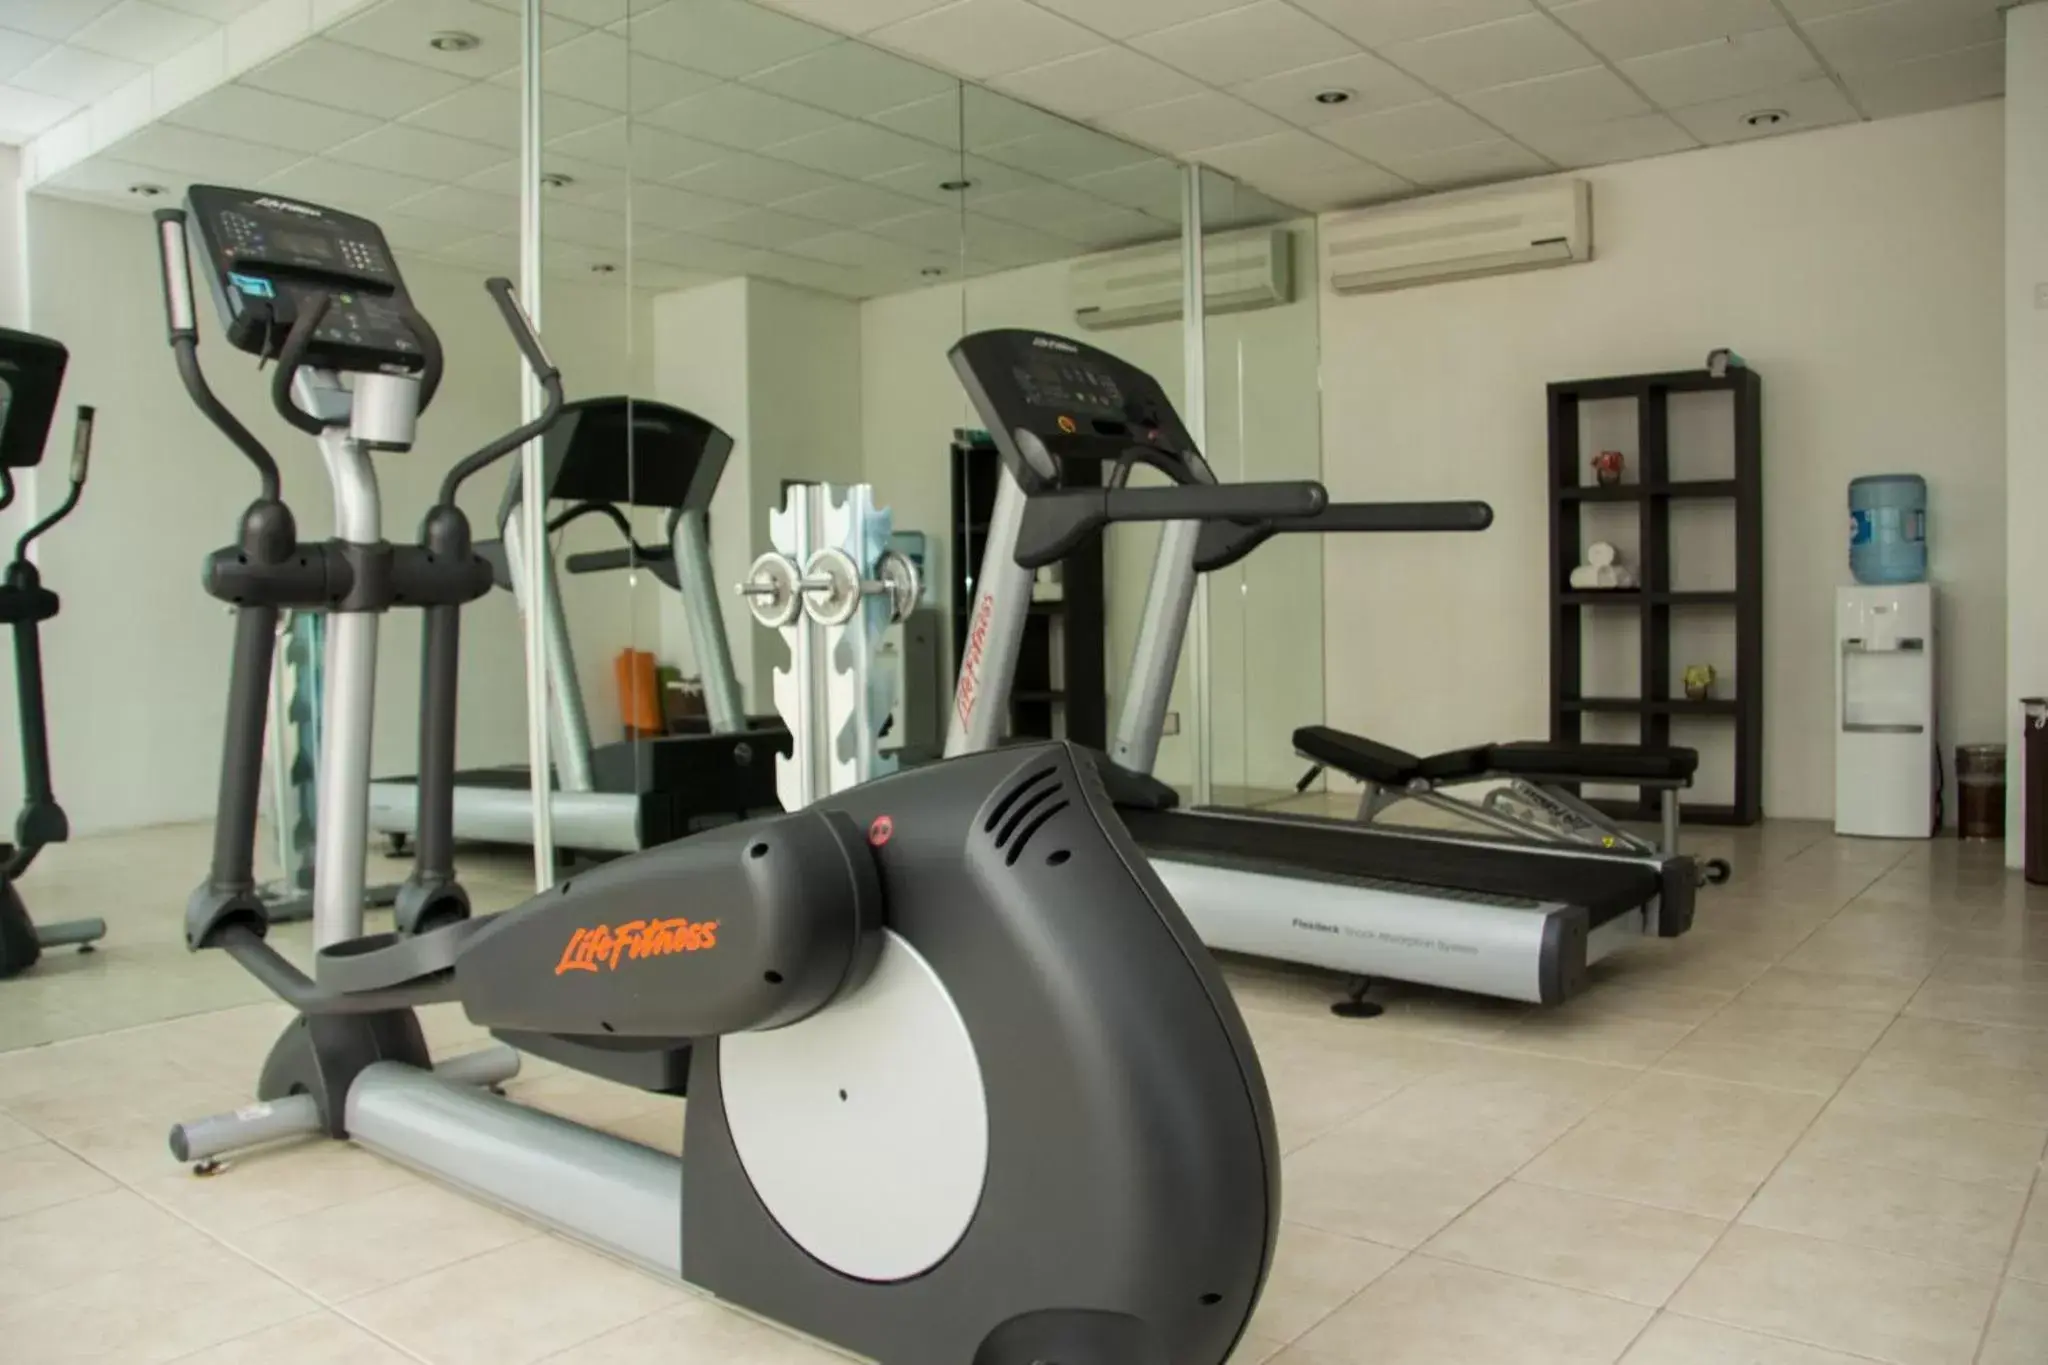 Fitness centre/facilities, Fitness Center/Facilities in Mesón de la Luna Hotel & Spa